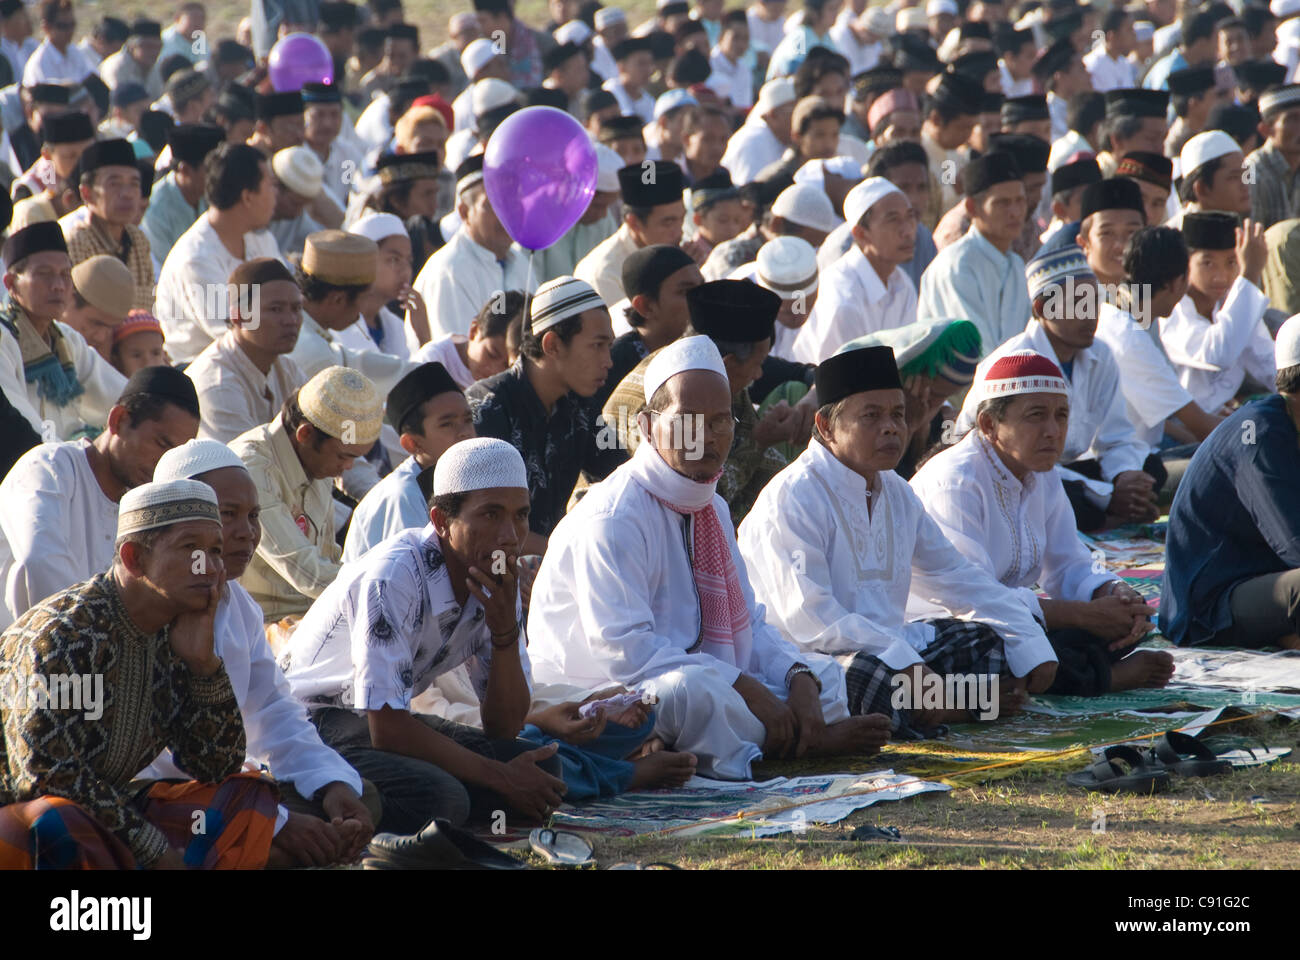 Men and boys sitting cross-legged wearing Muslim pegi caps, Idul Fitri ceremony, Denpasar, Bali, Indonesia, Asia Stock Photo